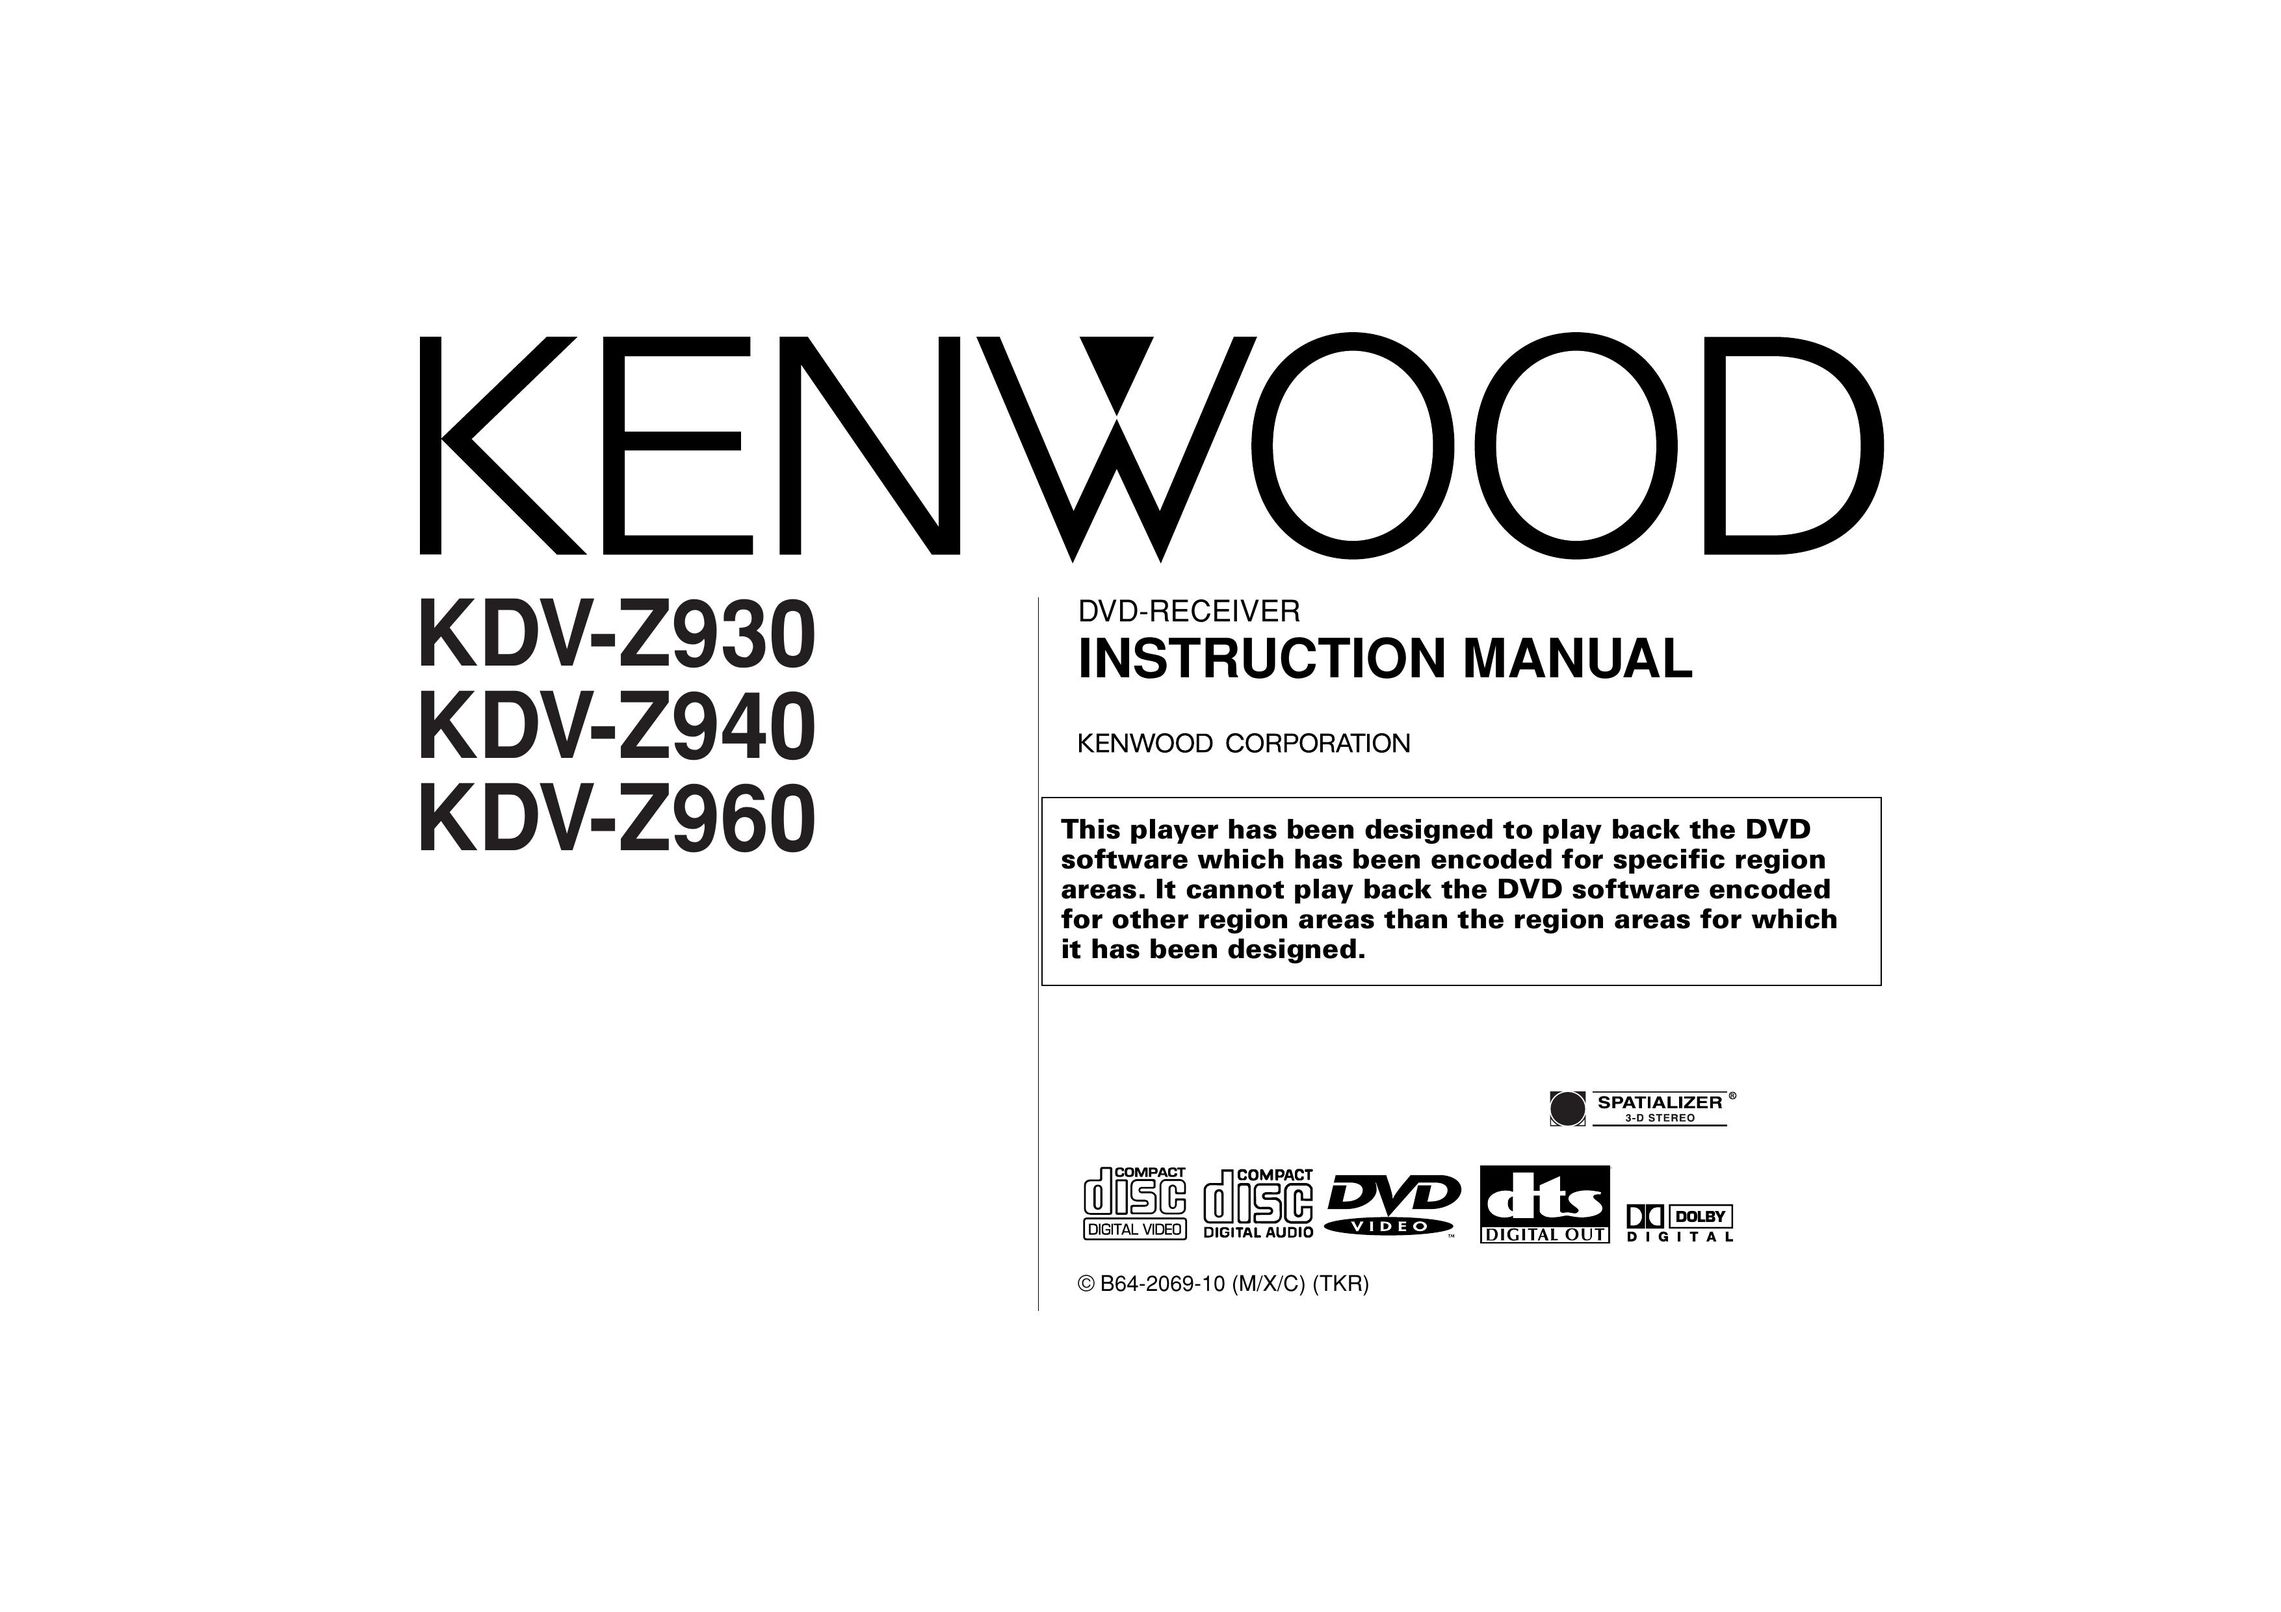 Kenwood KDV-Z960 DVD Player User Manual